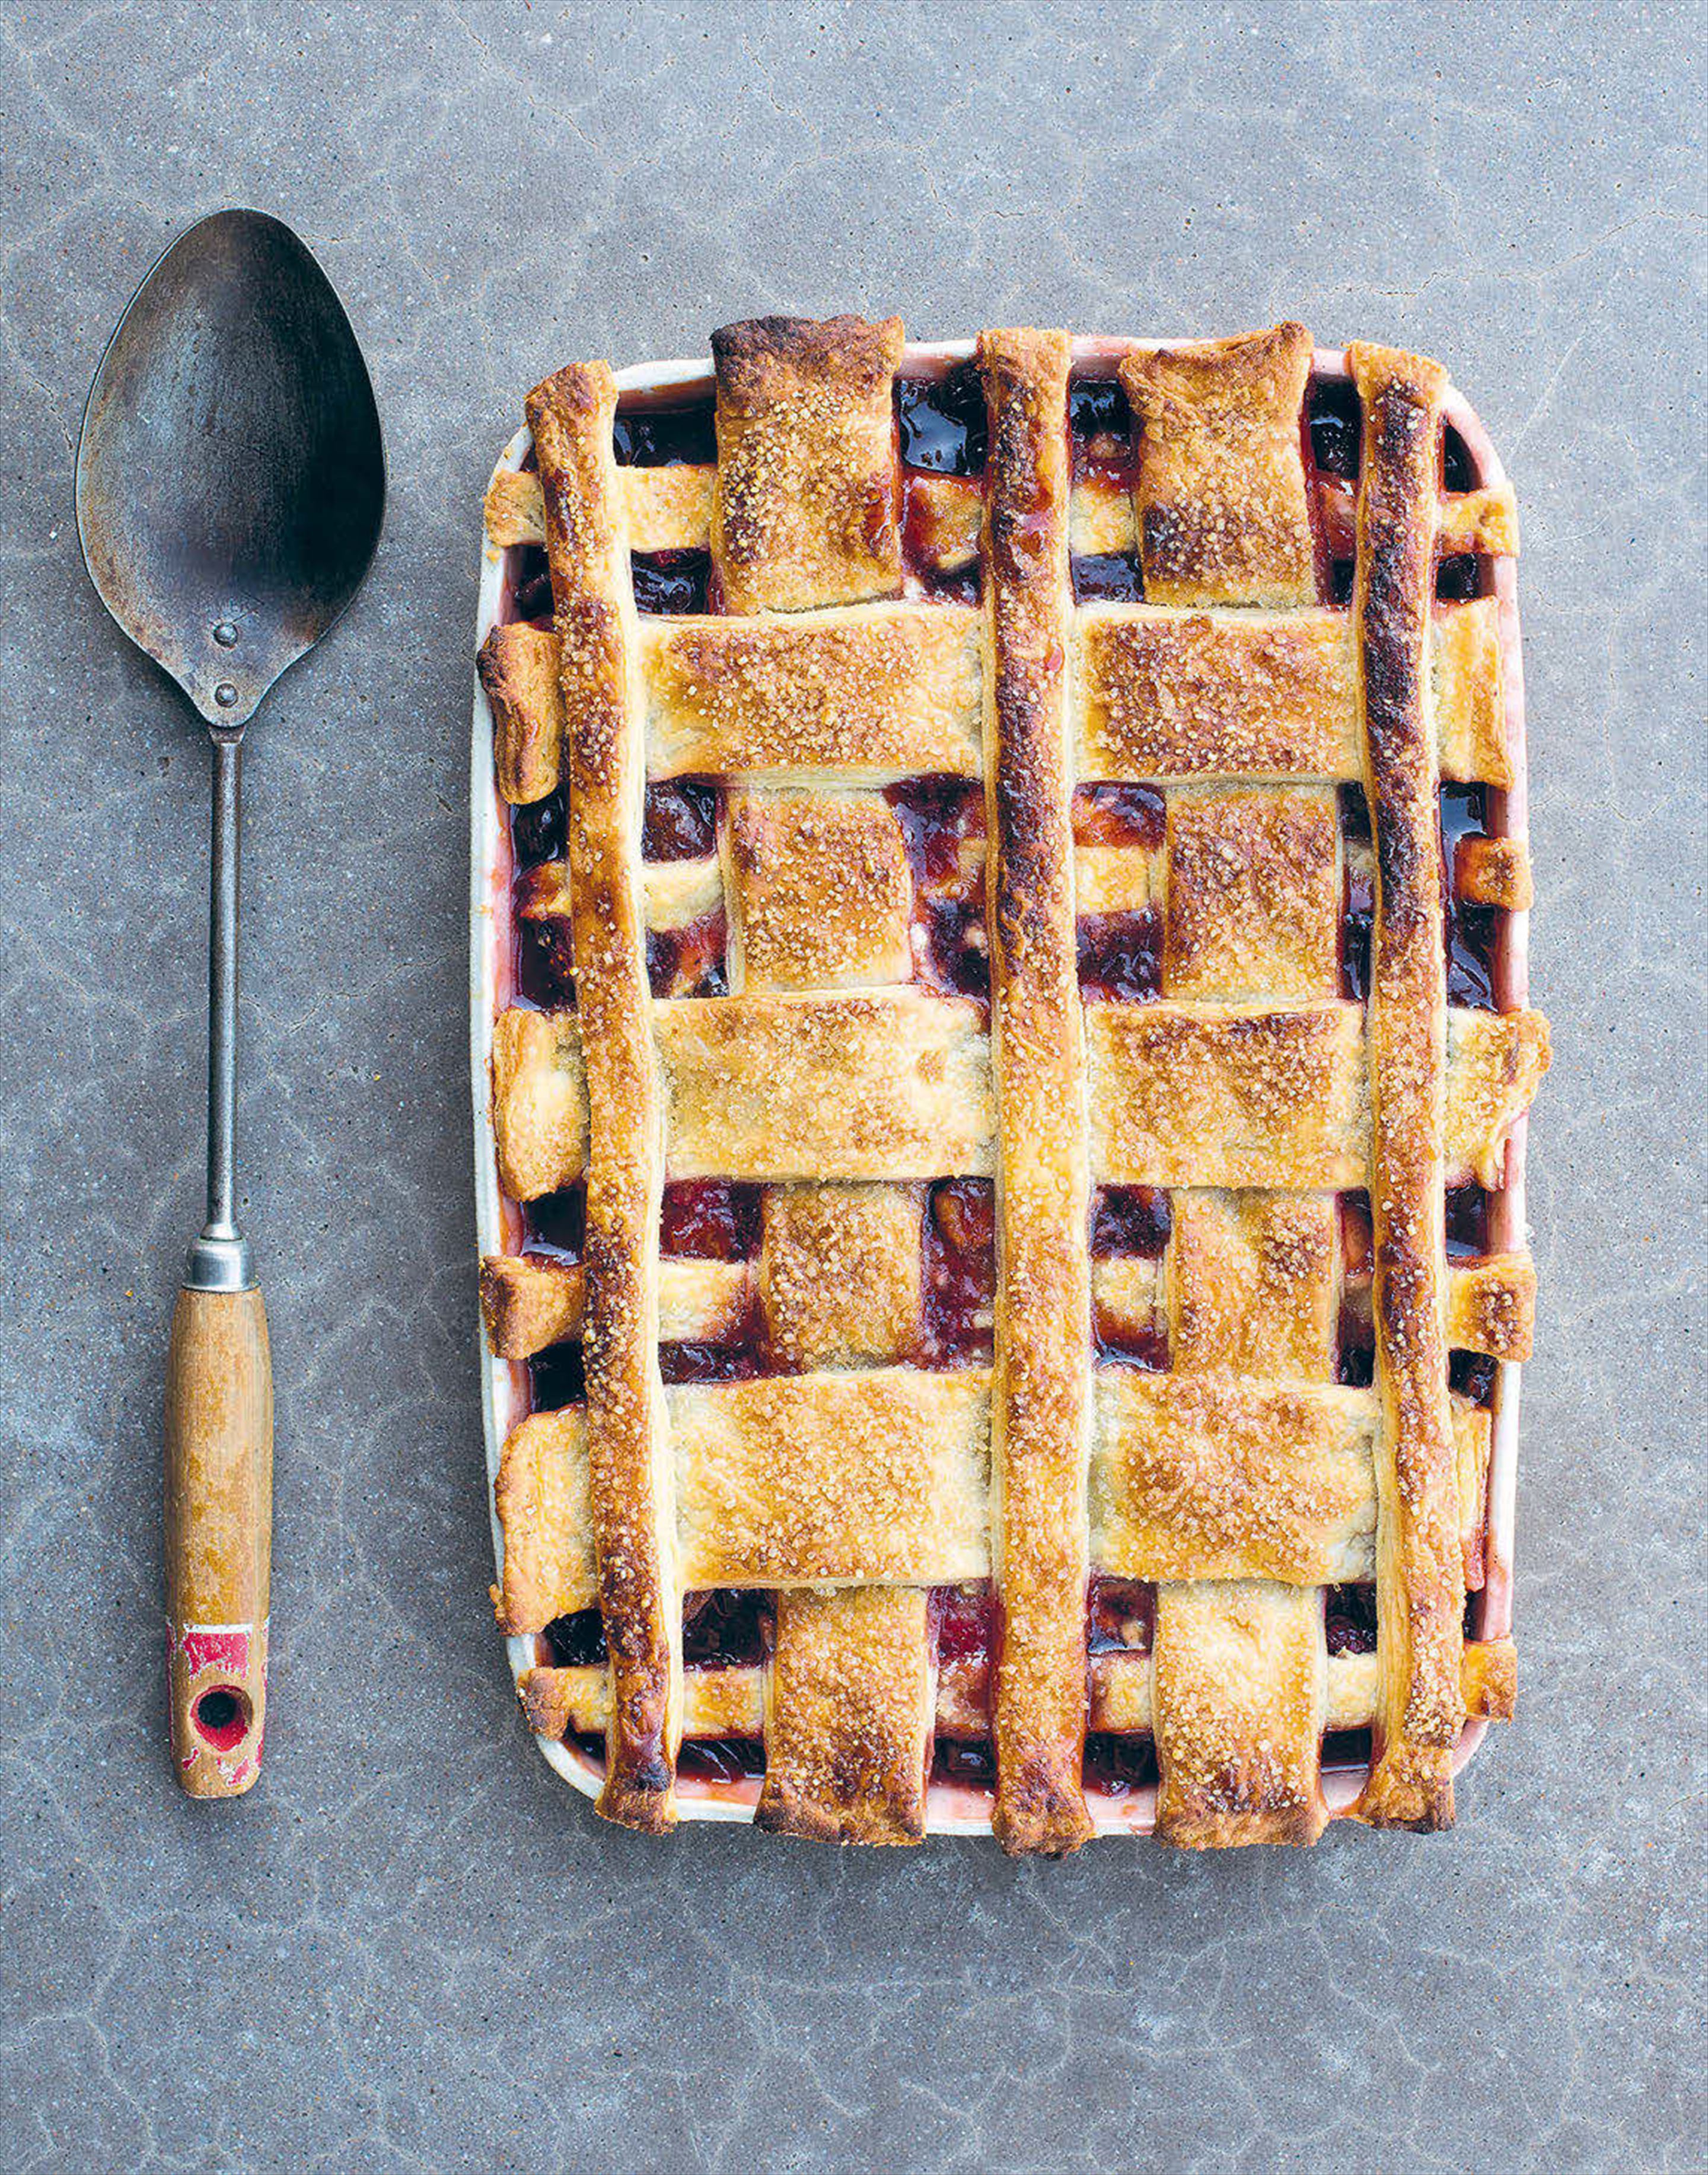 Apple and strawberry jam pie